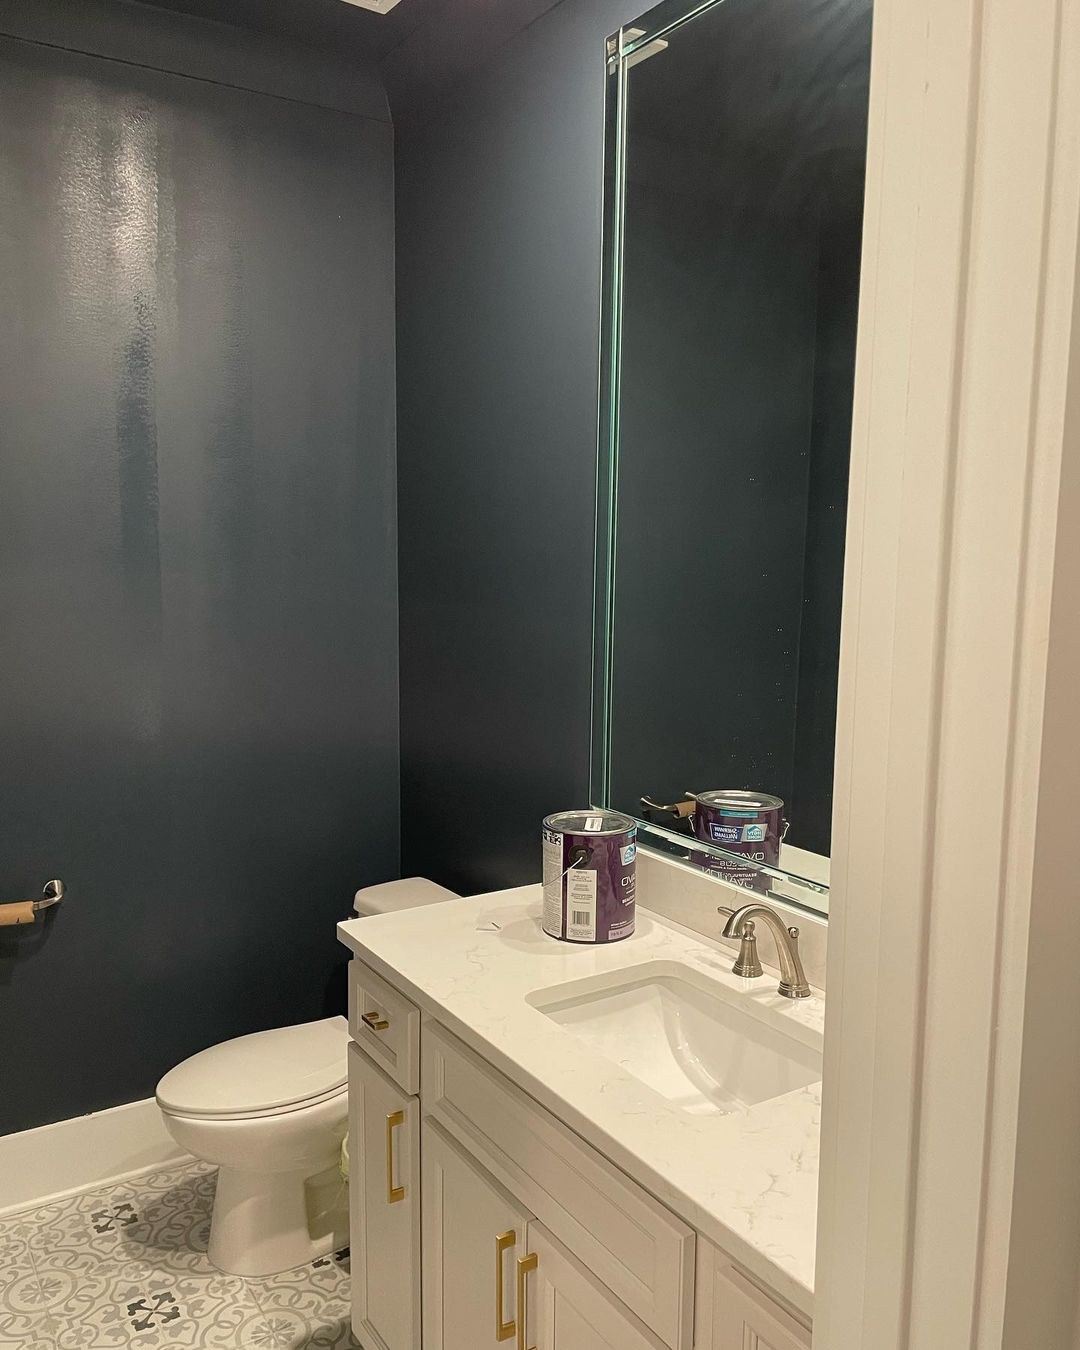 Paint for bathroom walls